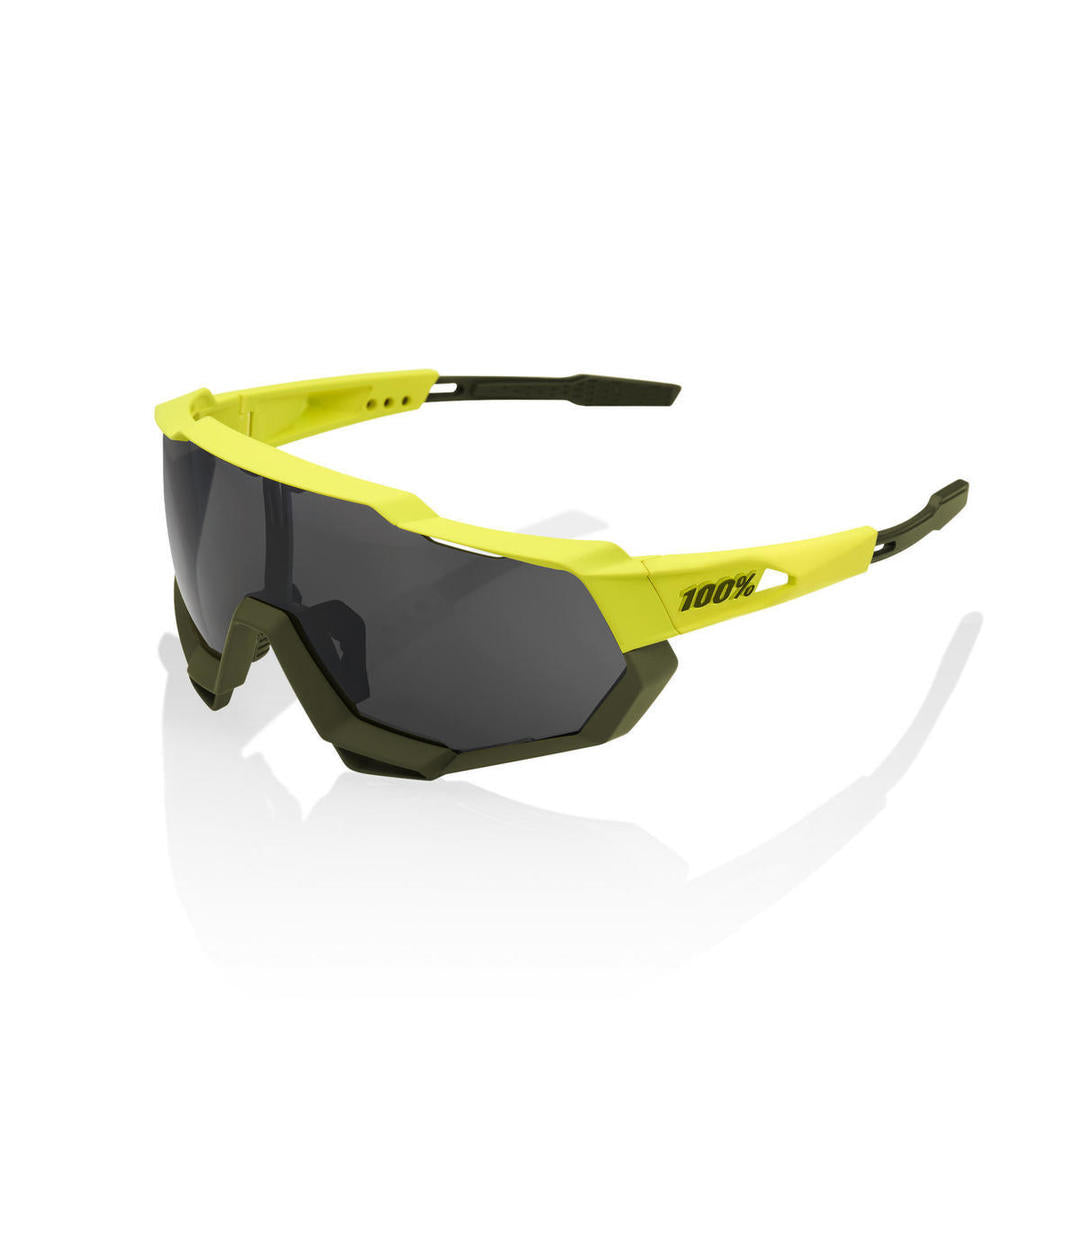 RIDE 100% Gafas de Sol Speedtrap Soft Tact Banana - Lente Espejo Negro